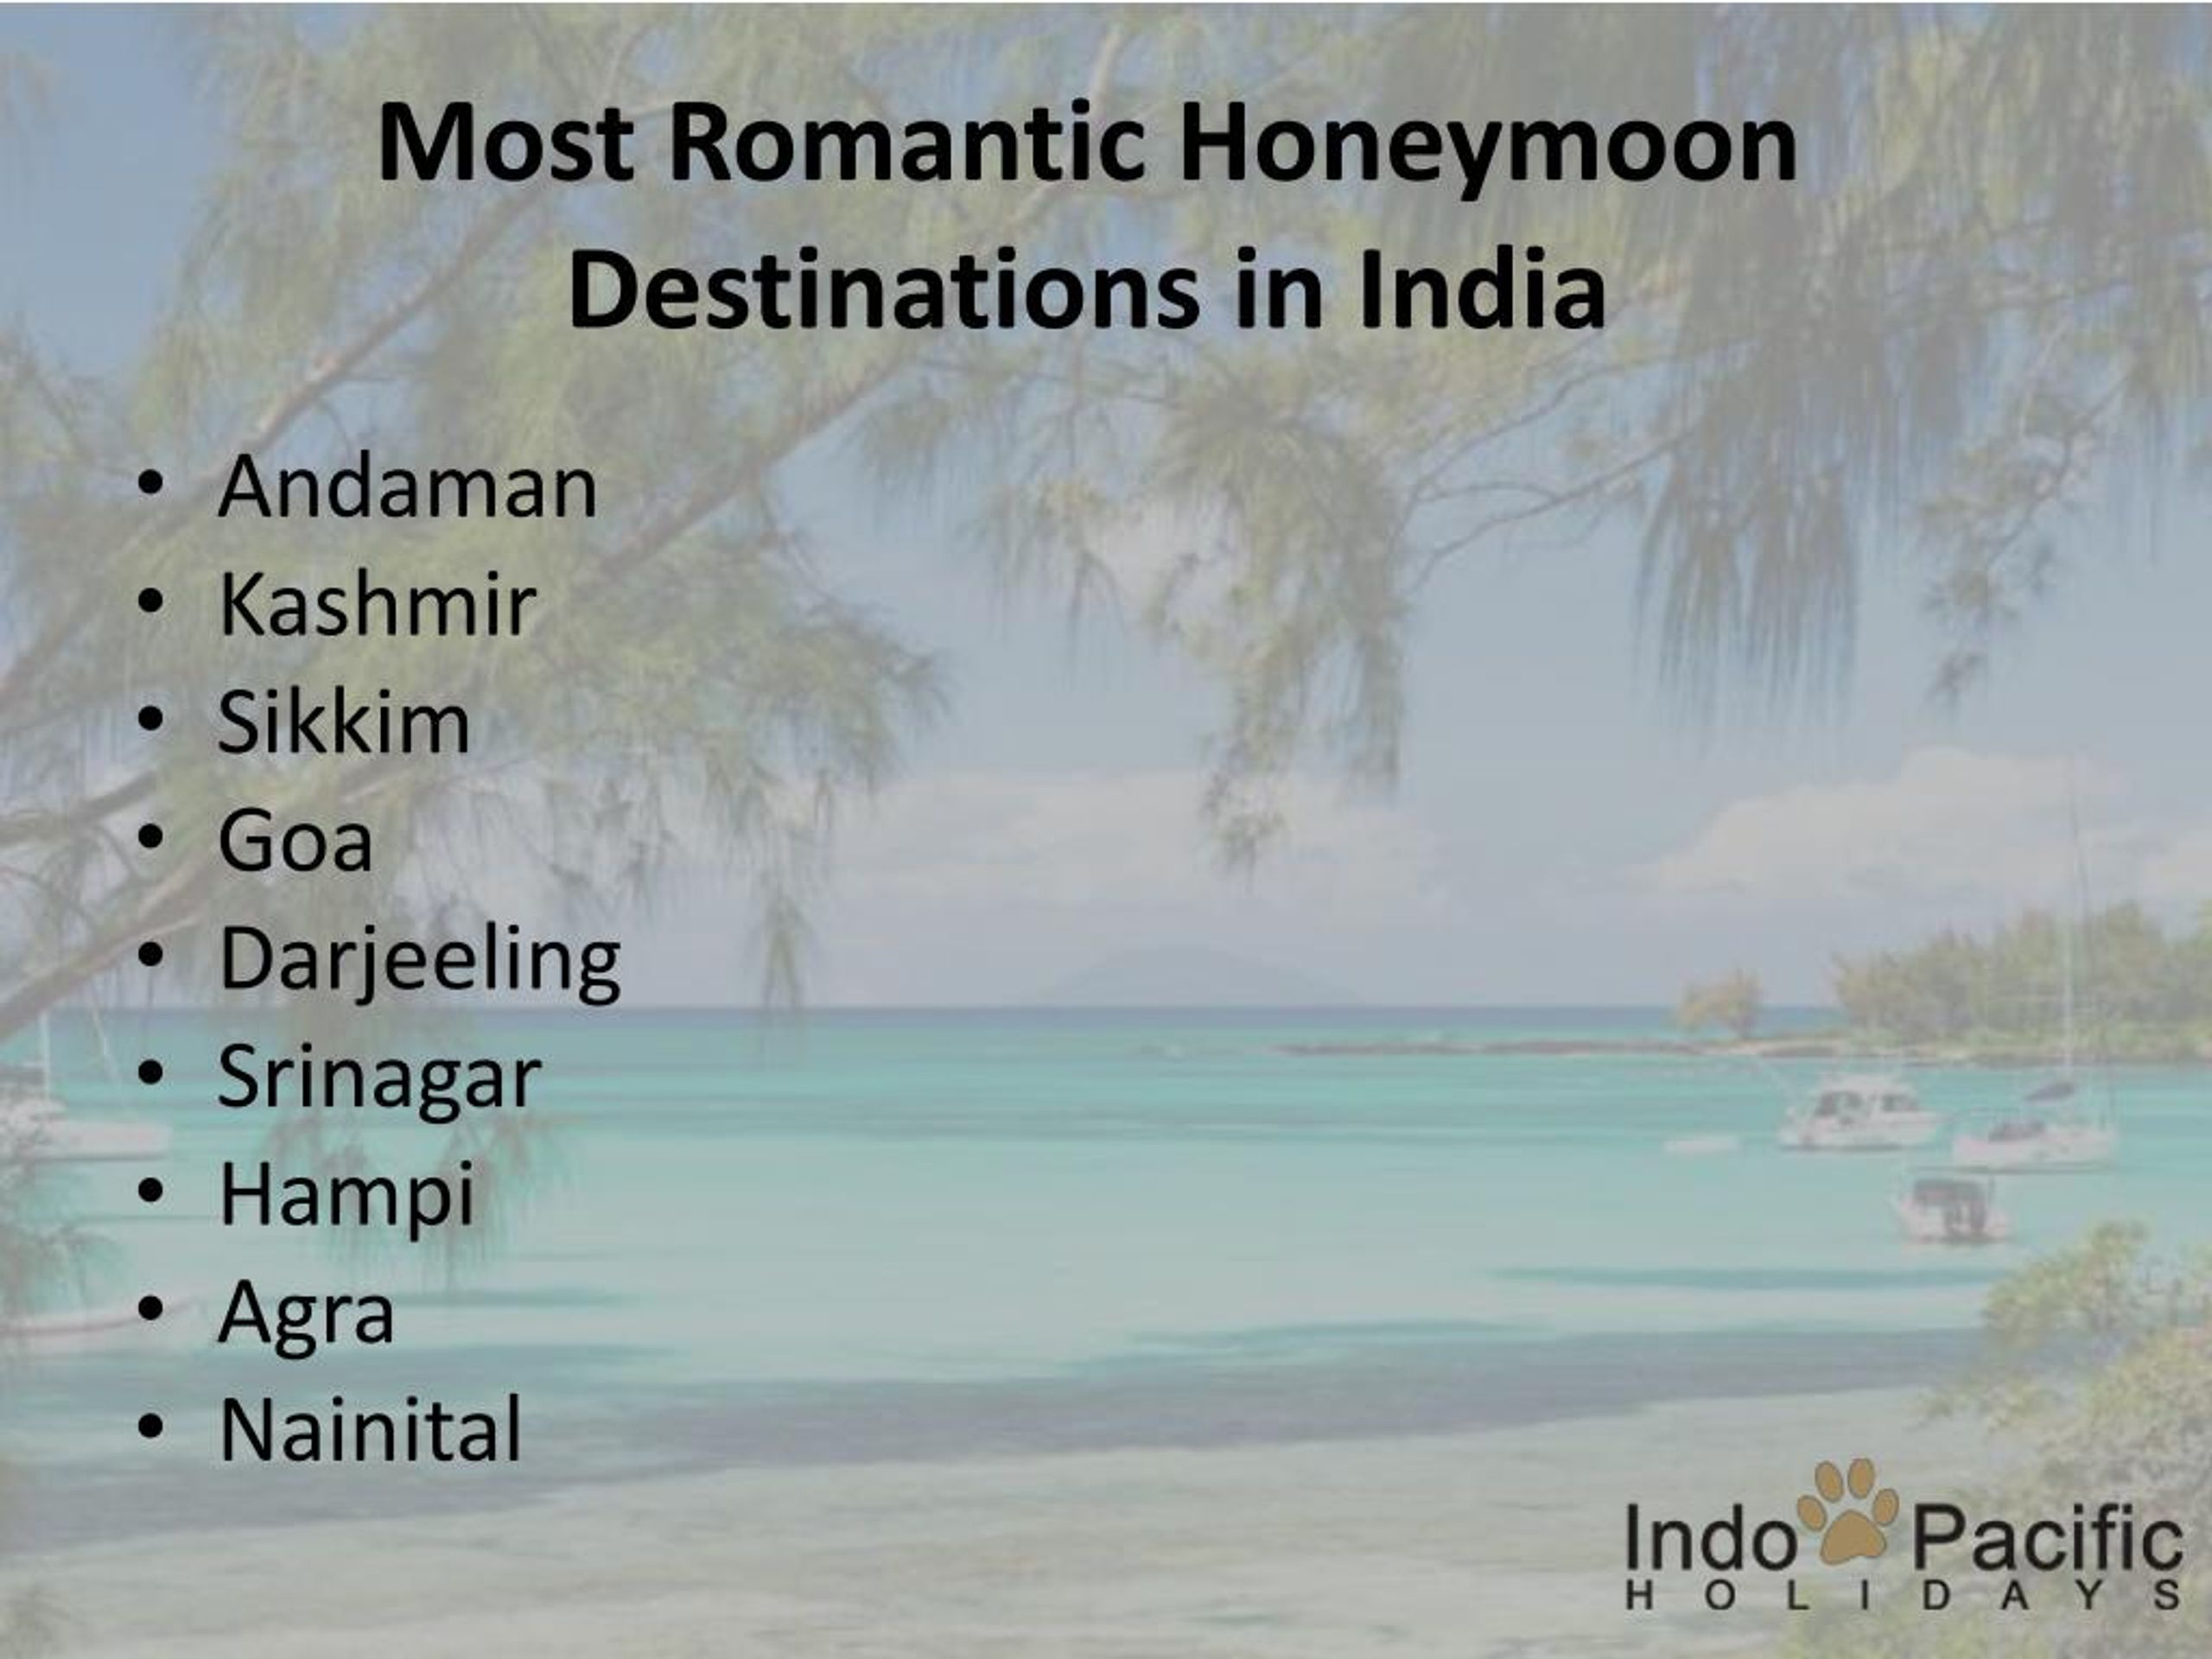 Ppt Most Romantic Honeymoon Destinations In India Powerpoint Presentation Id 7635100